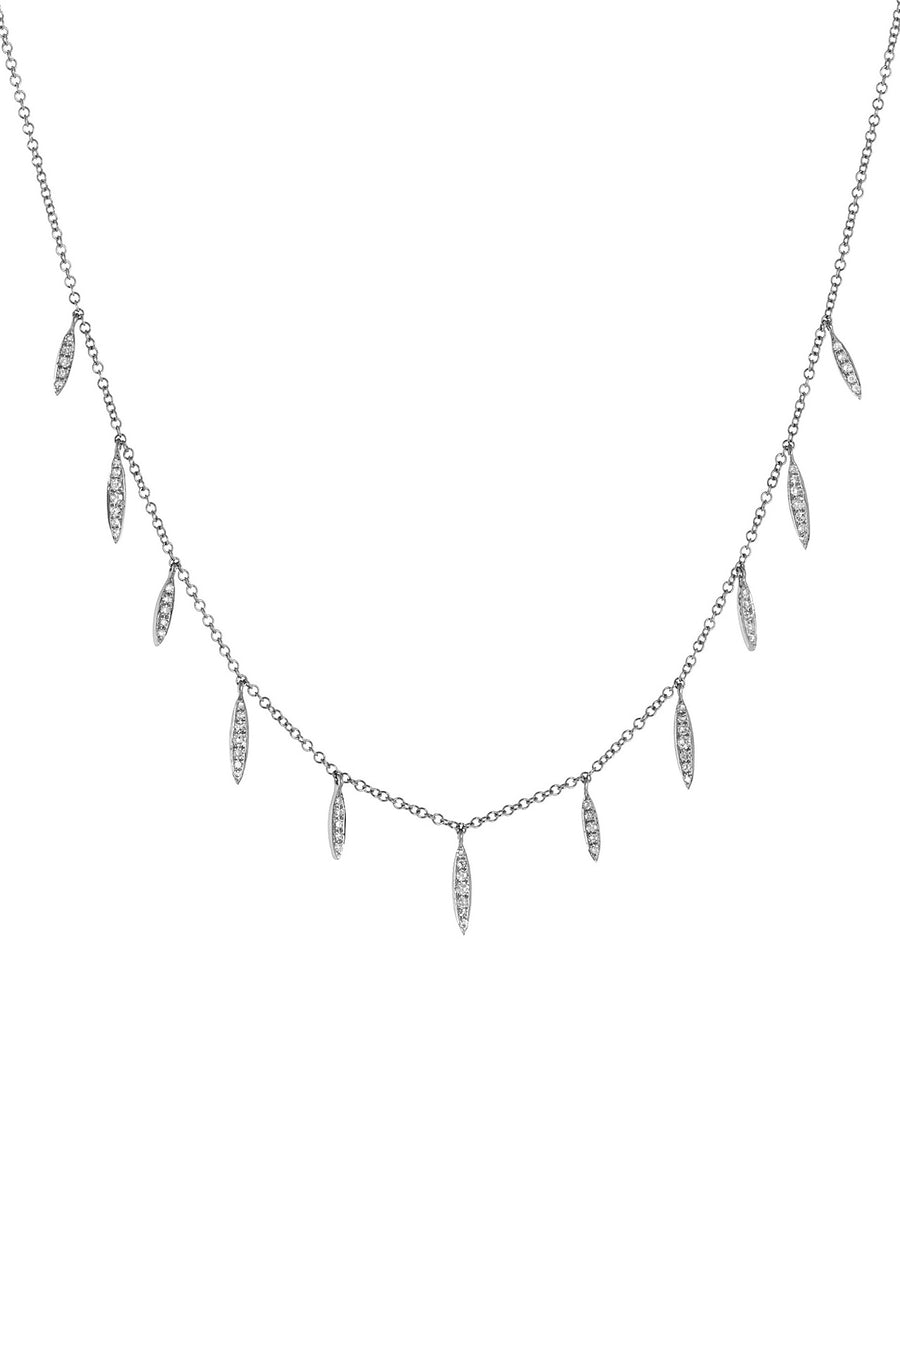 Multi-diamond drop necklace in 14k white gold